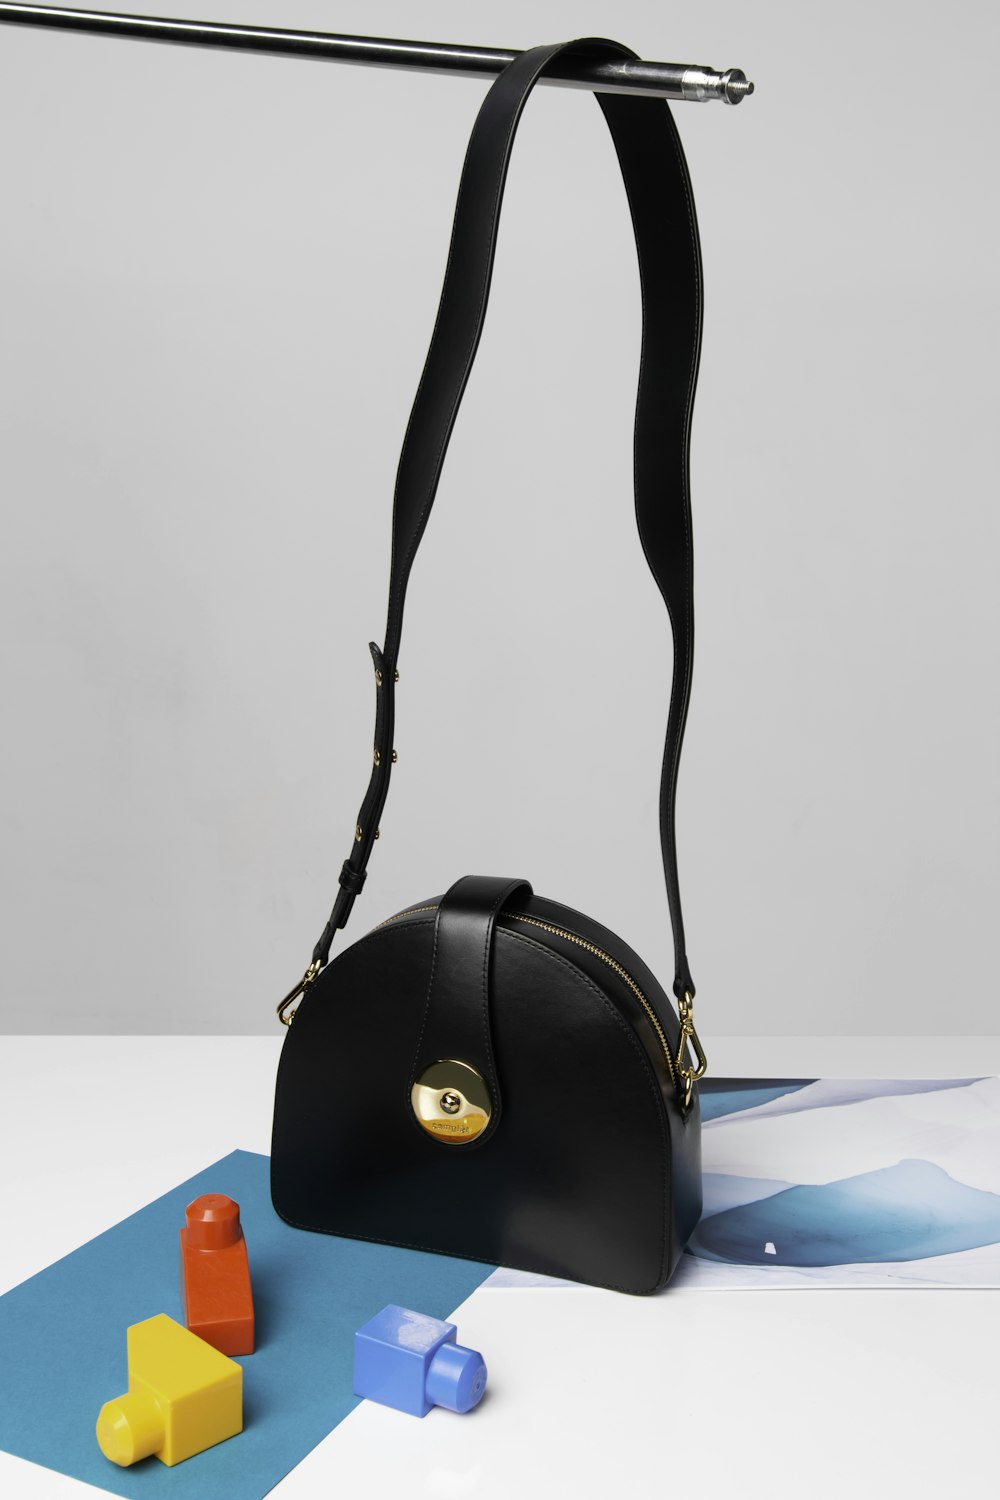 black leather handbag on white table